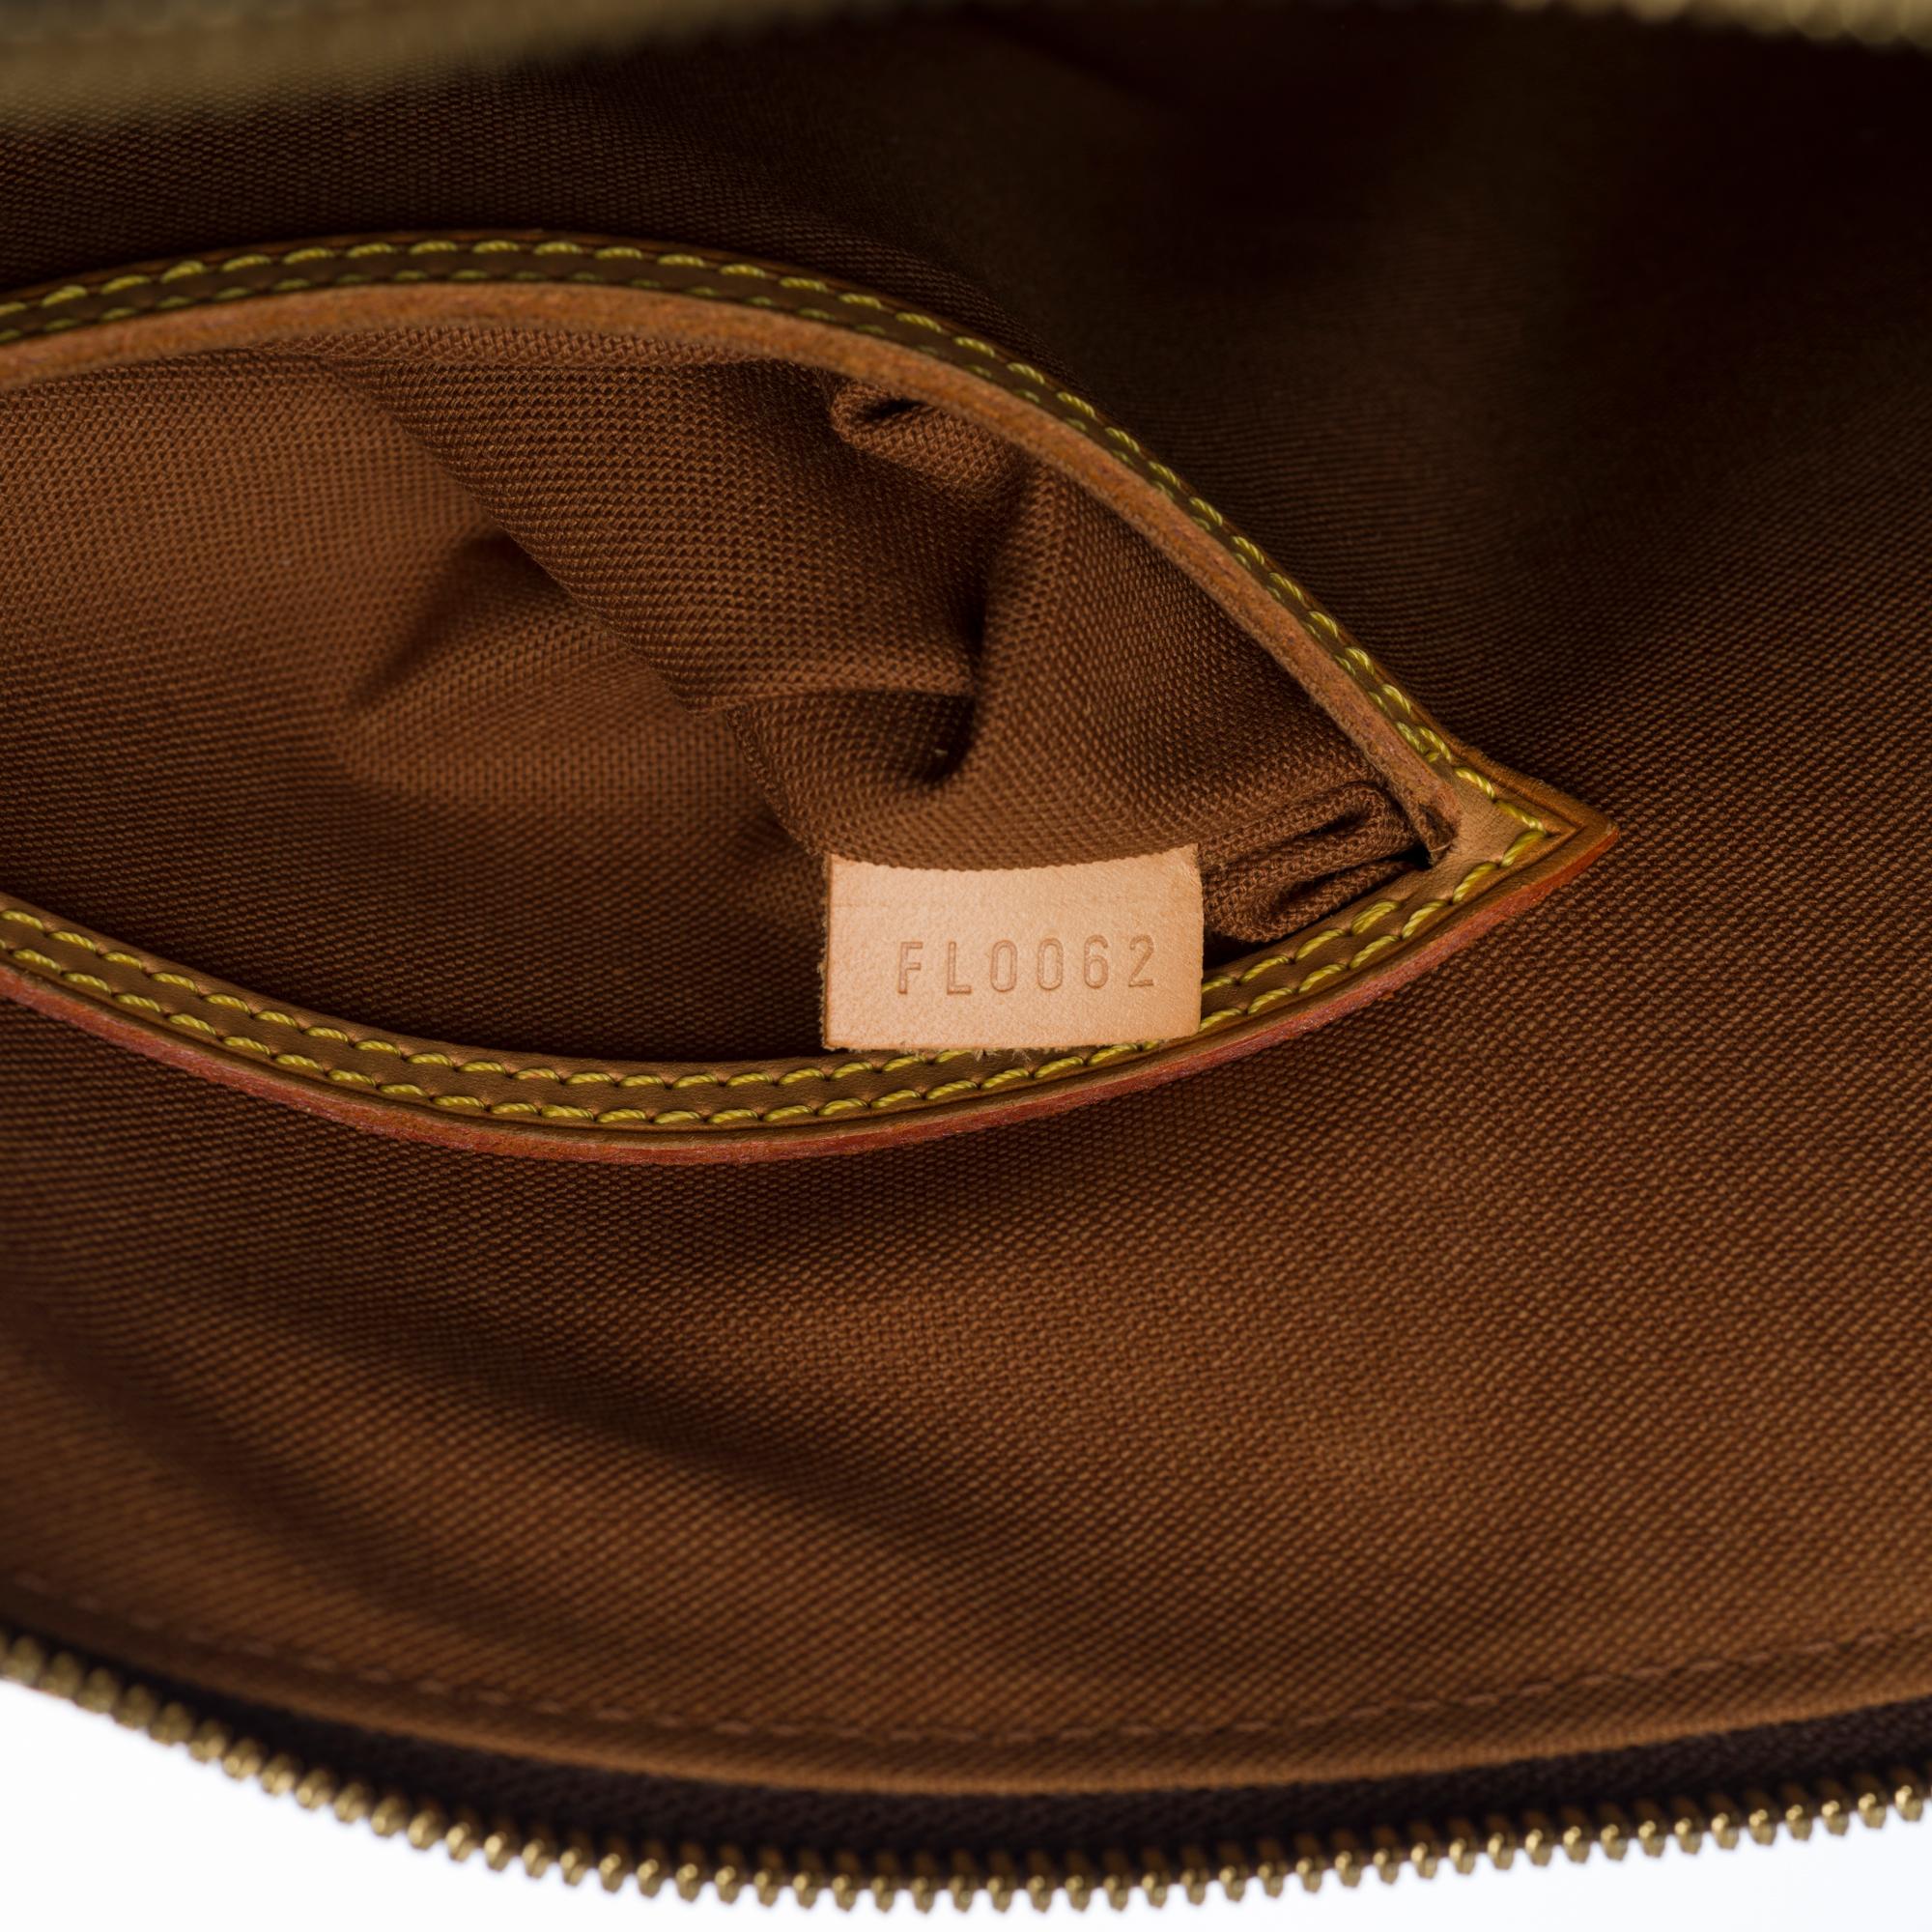 Black Louis Vuitton Alma MM handbag with strap in brown Monogram canvas